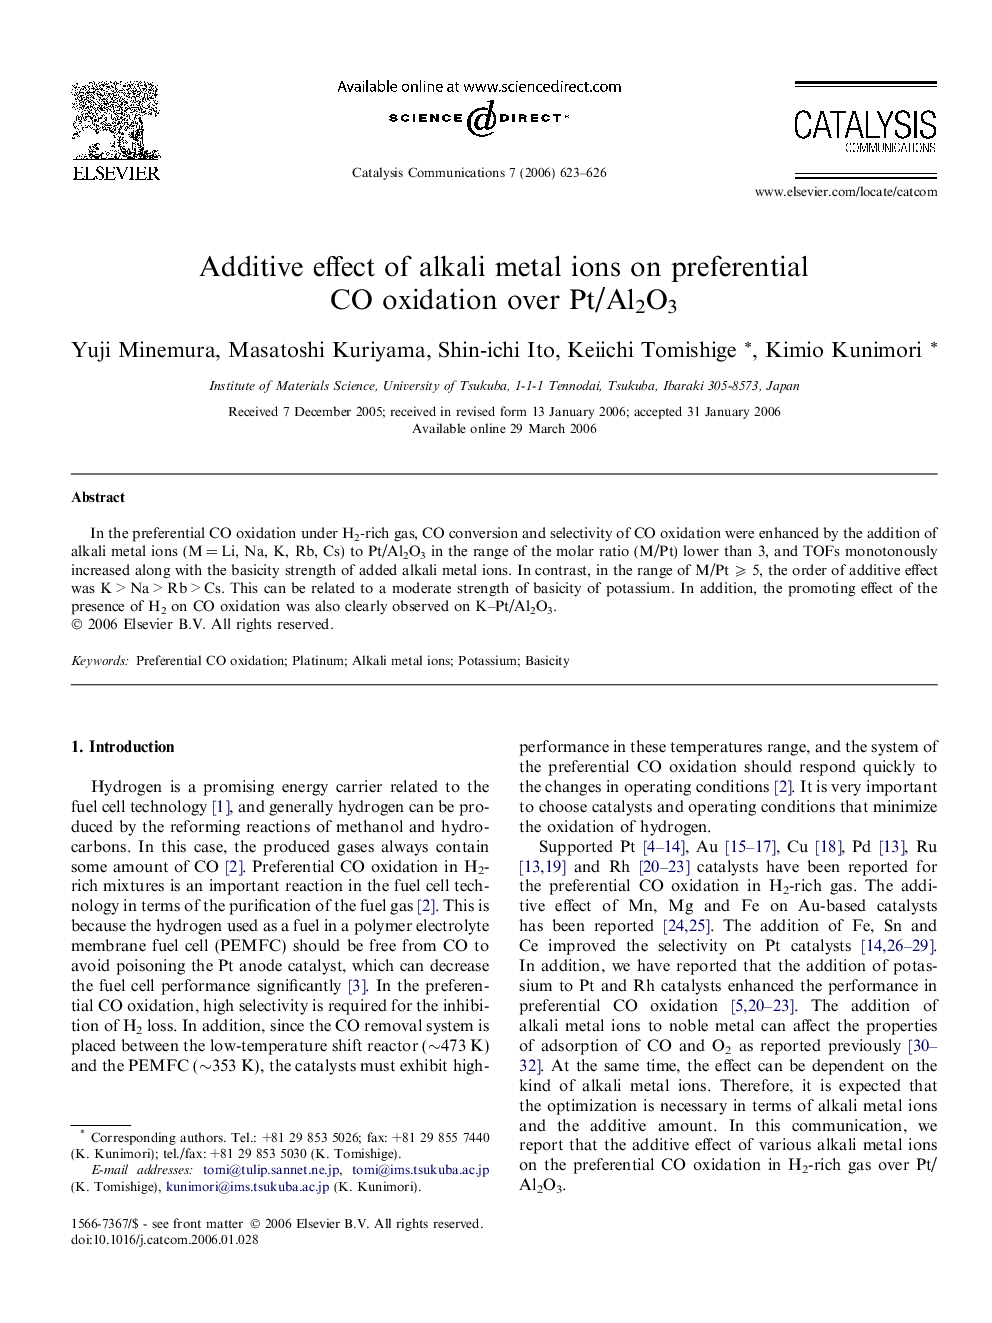 Additive effect of alkali metal ions on preferential CO oxidation over Pt/Al2O3